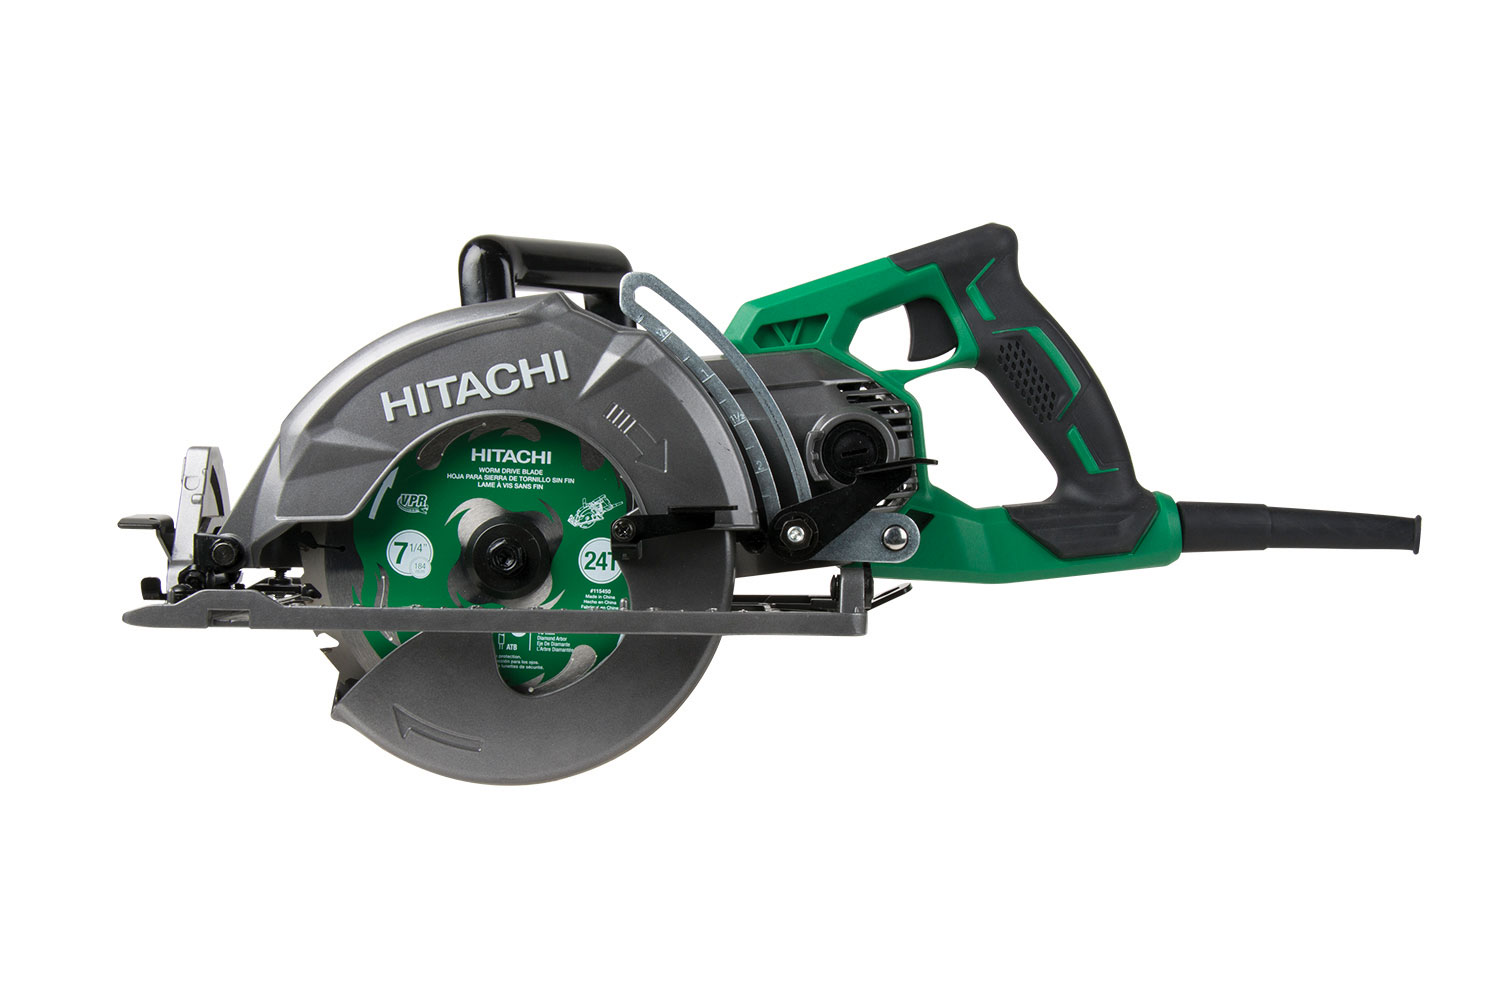 Hitachi Power Tools' Circular Saw